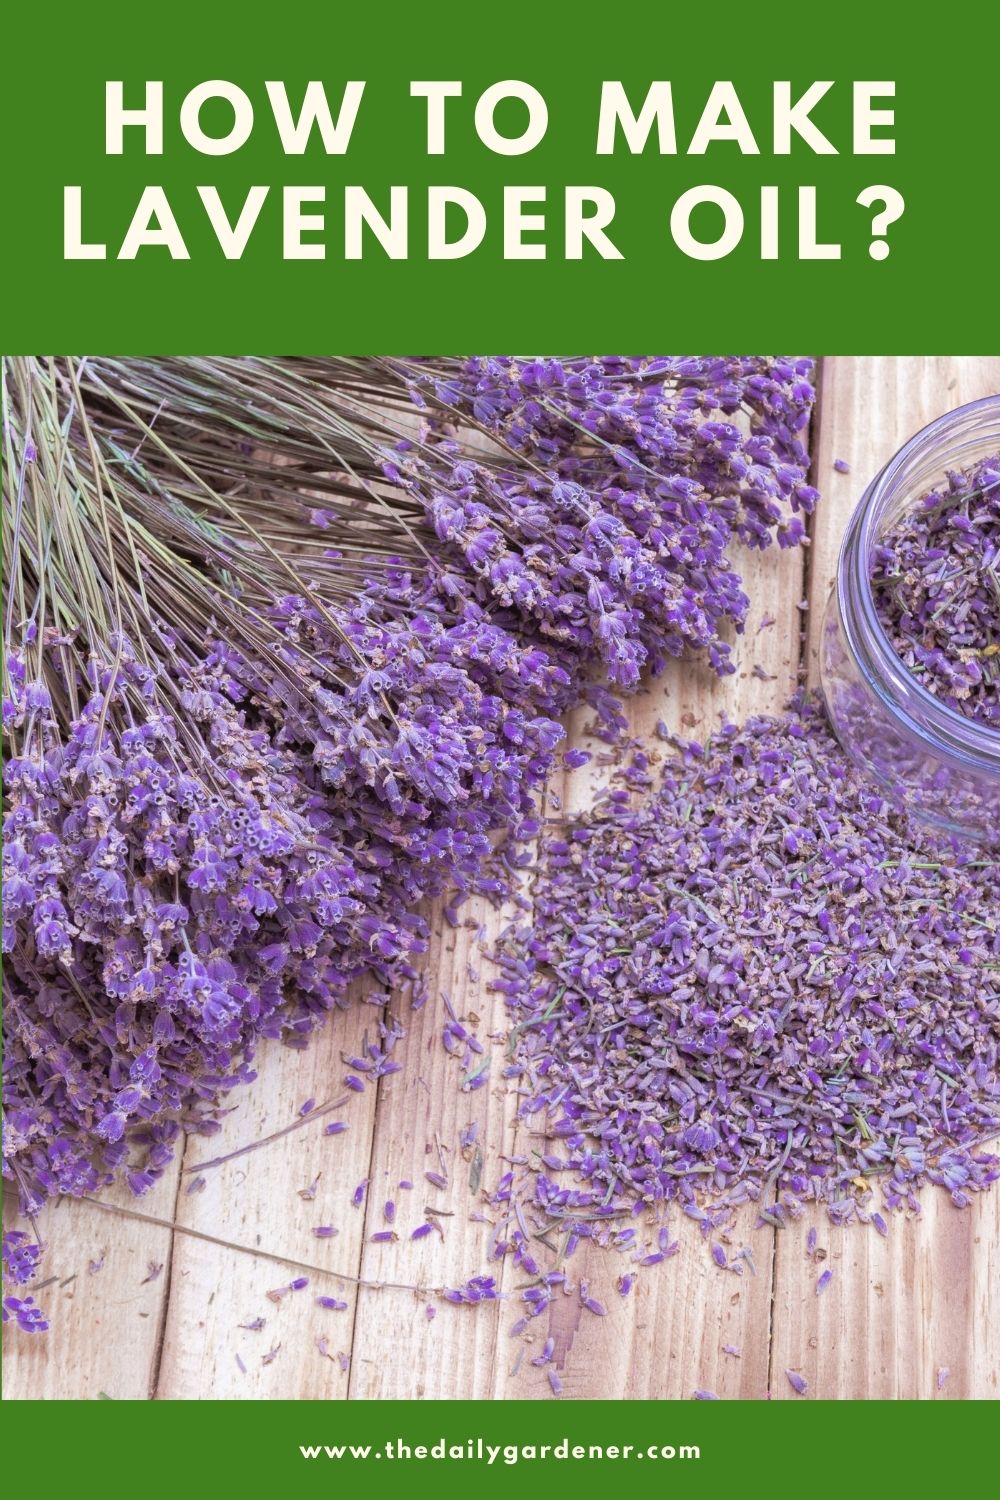 How to Make Lavender Oil (2 Methods)